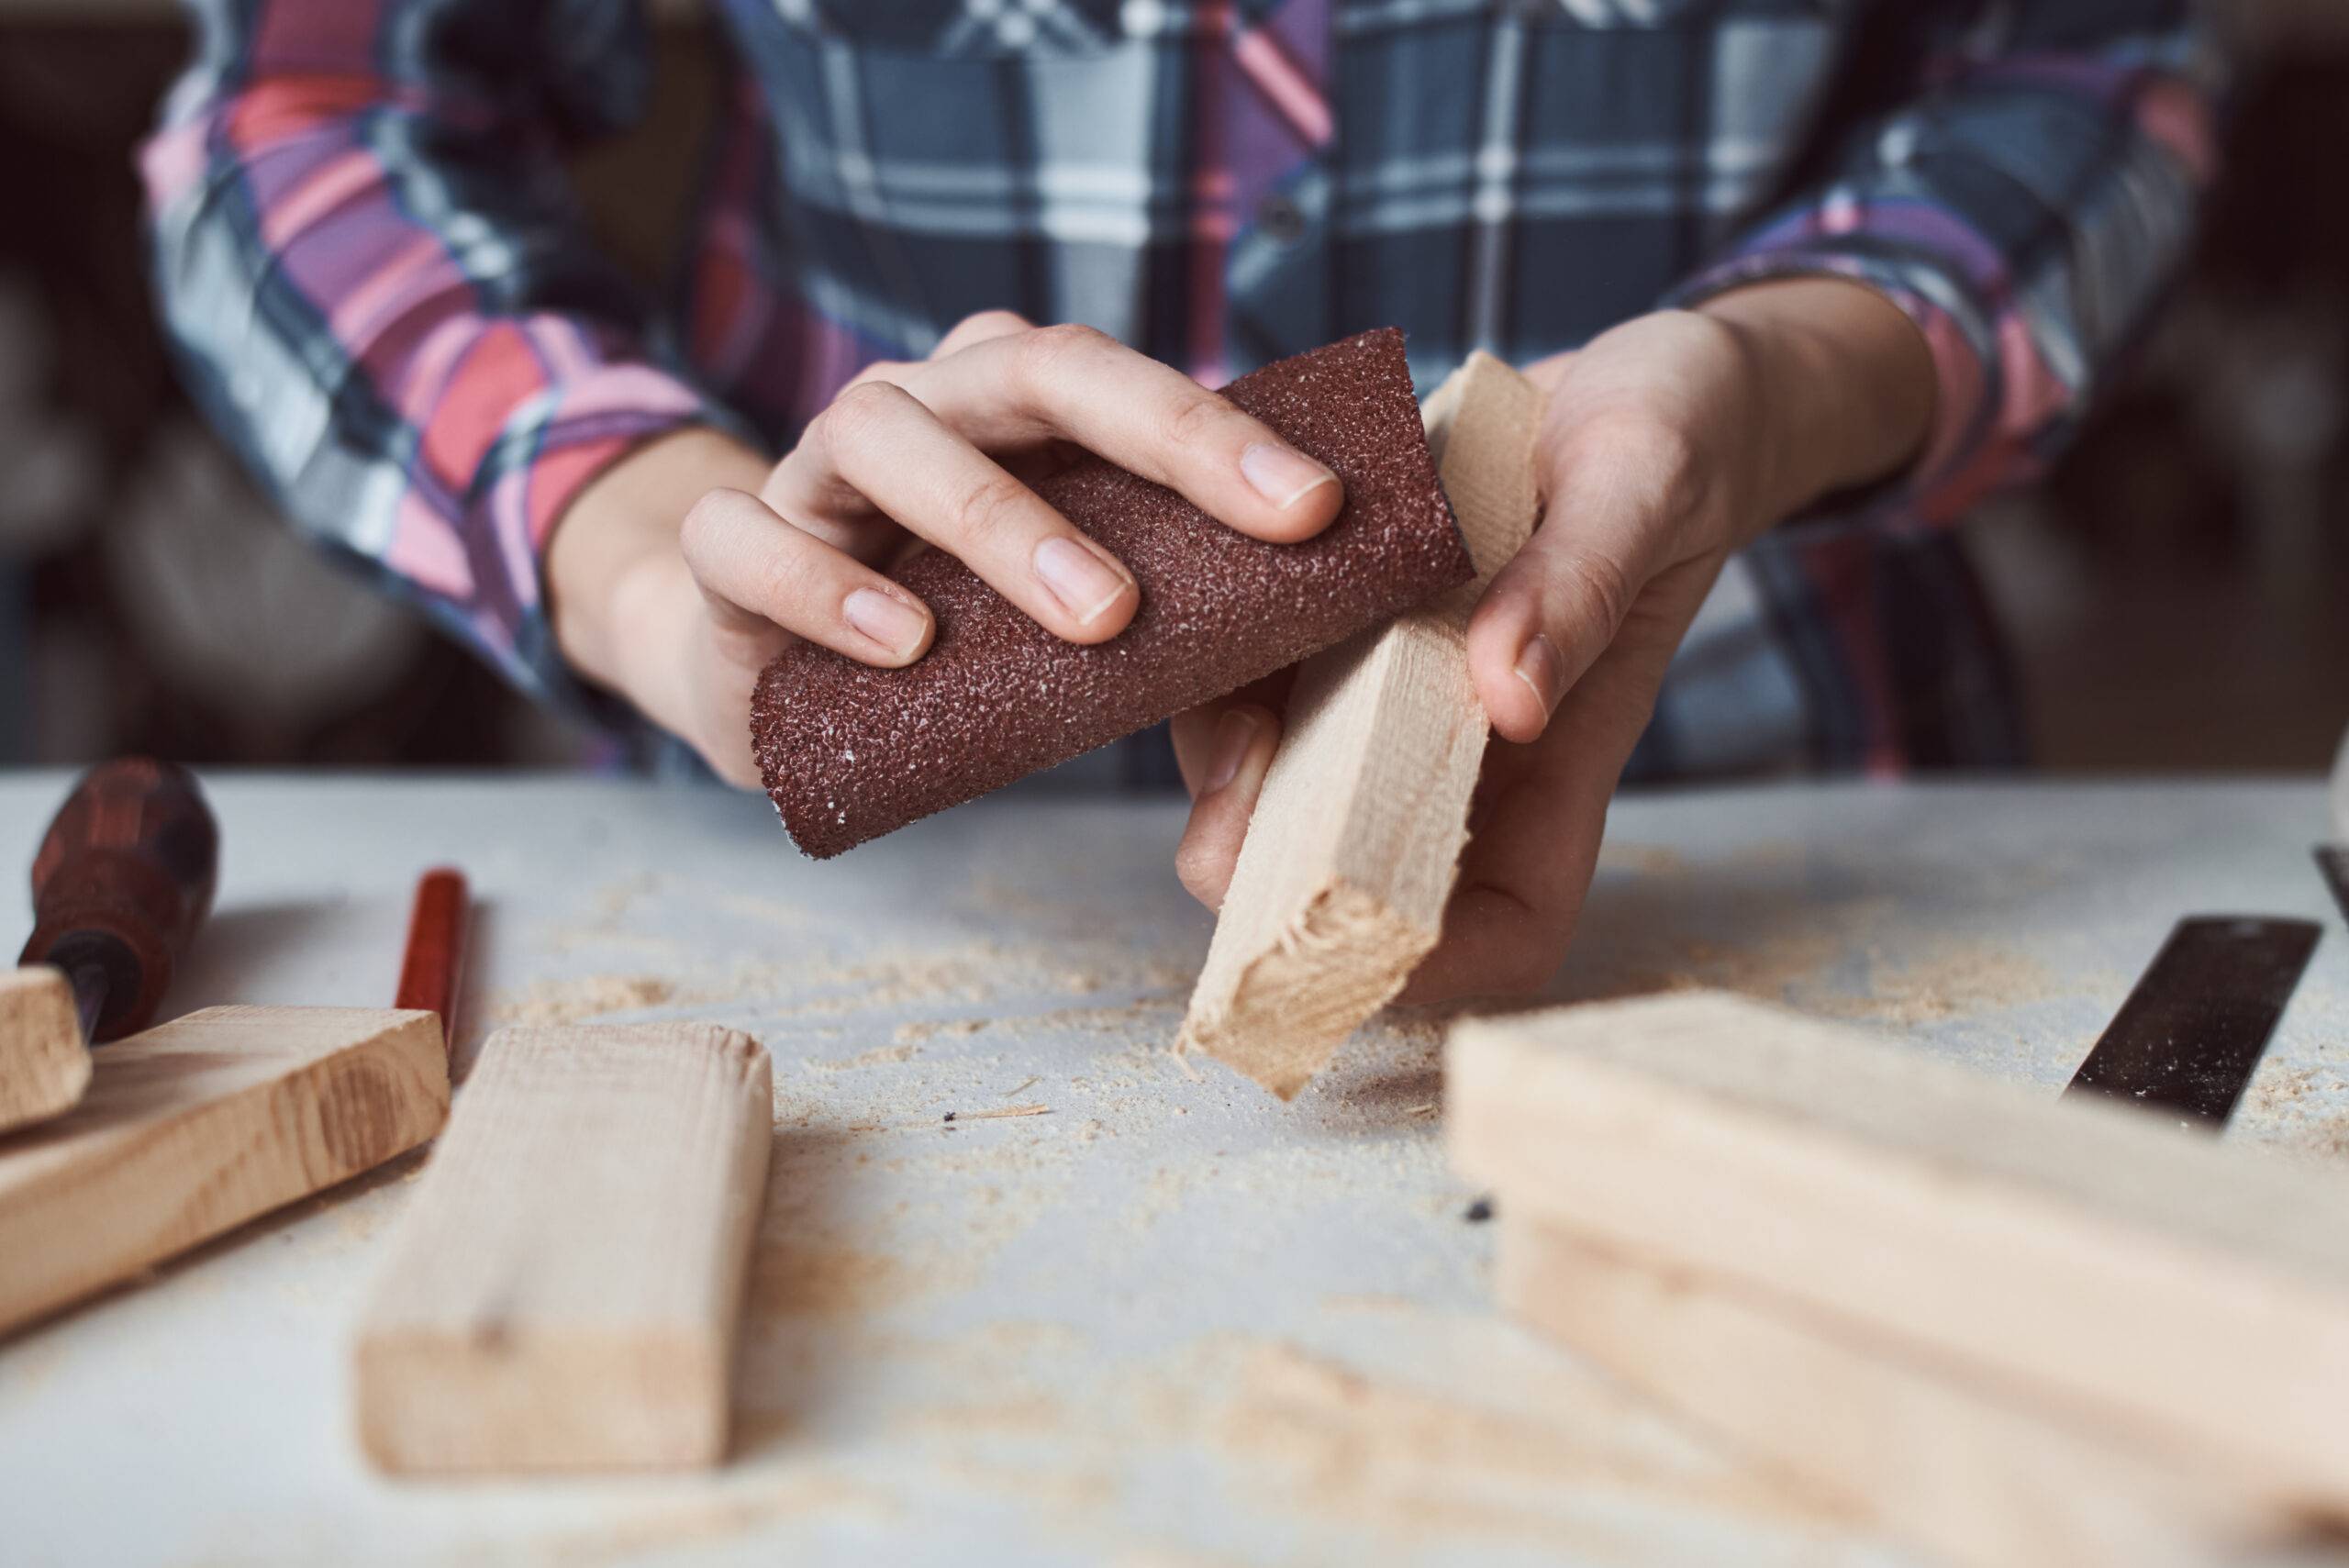 Carpenter hands sanding wooden planks with sandpaper. Concept of DIY woodwork and furniture making